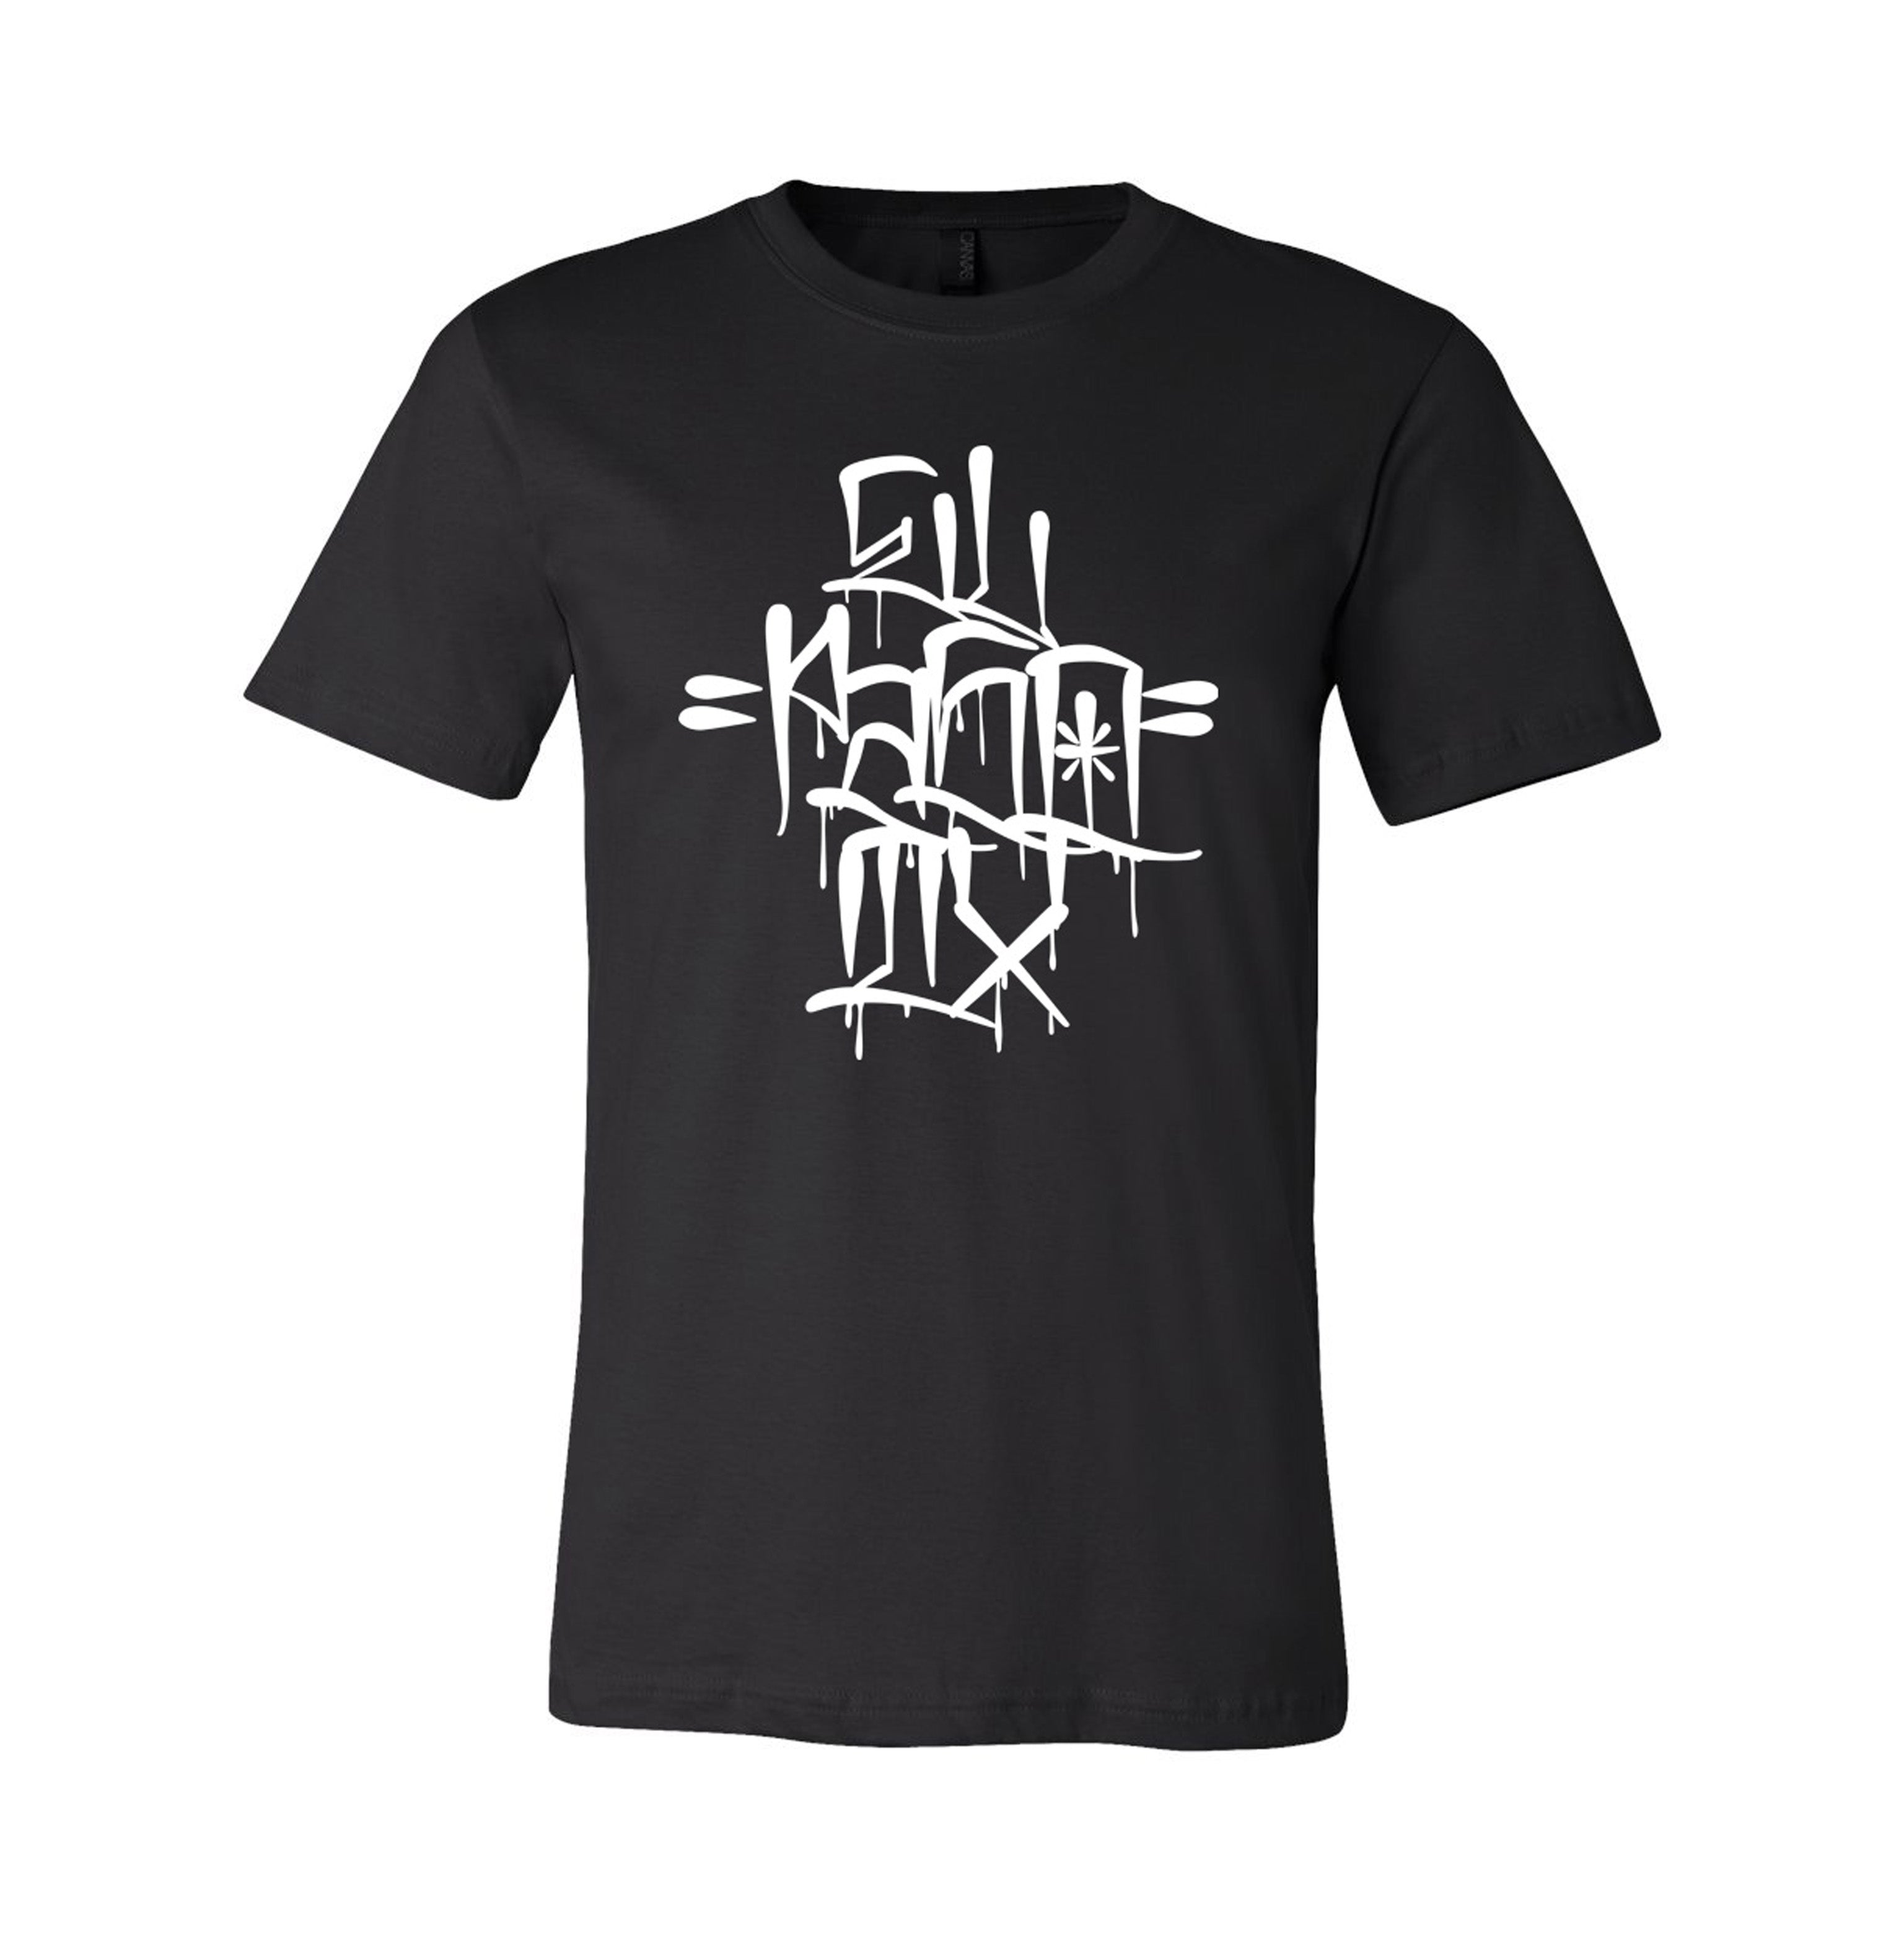 El Paso TX "Cholo TAG" - Unisex Jersey Tee (Black) by NES T-shirts